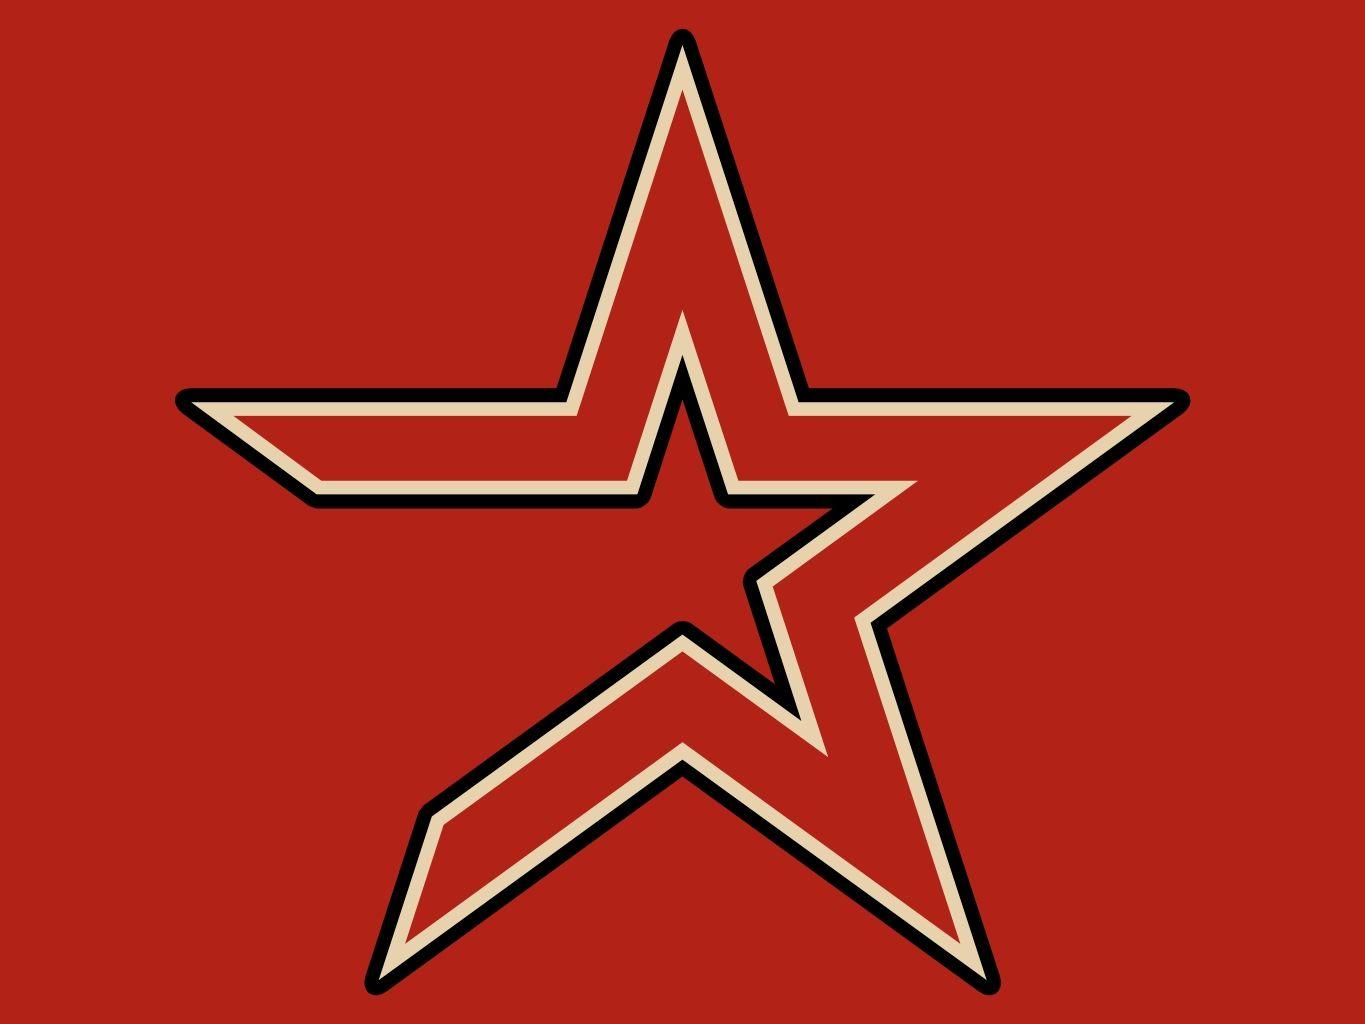 Houston Astros Logo - Draw a sports logo from memory: Houston Astros - SBNation.com